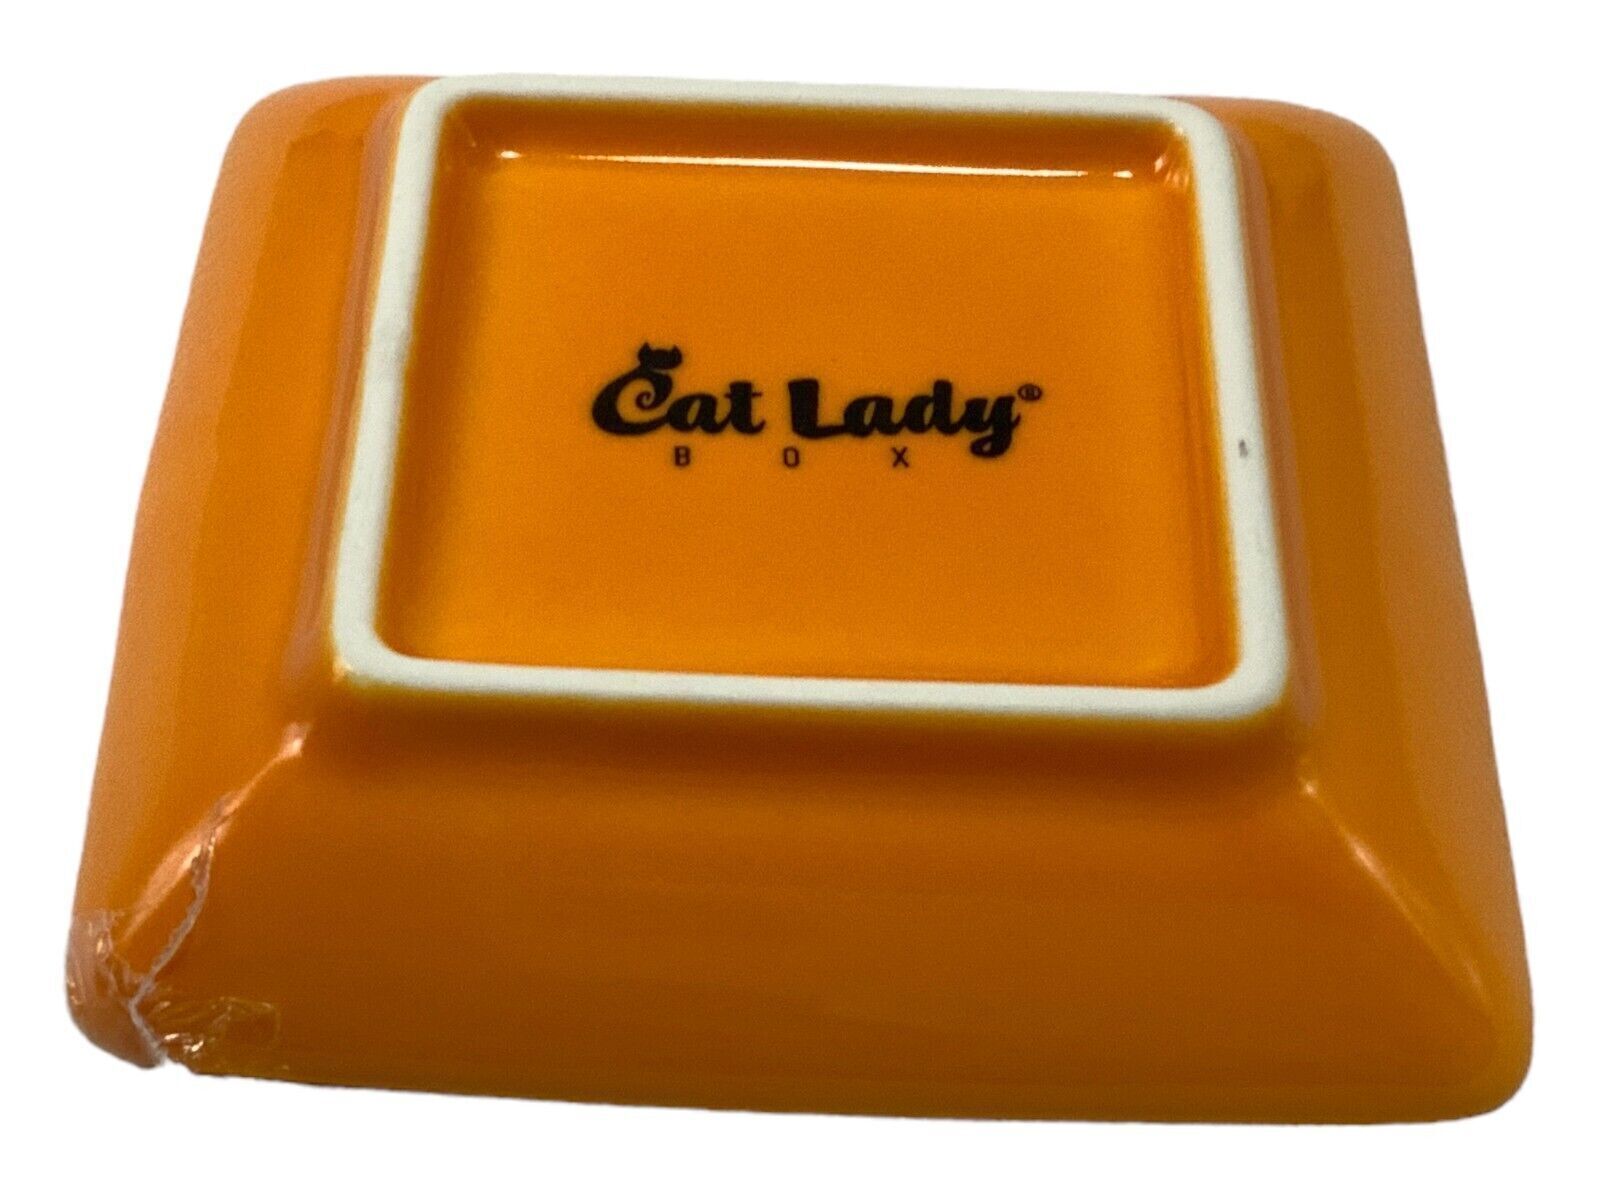 Cat Lady Box orange kitty cat trinket tray 3" Без бренда - фотография #2